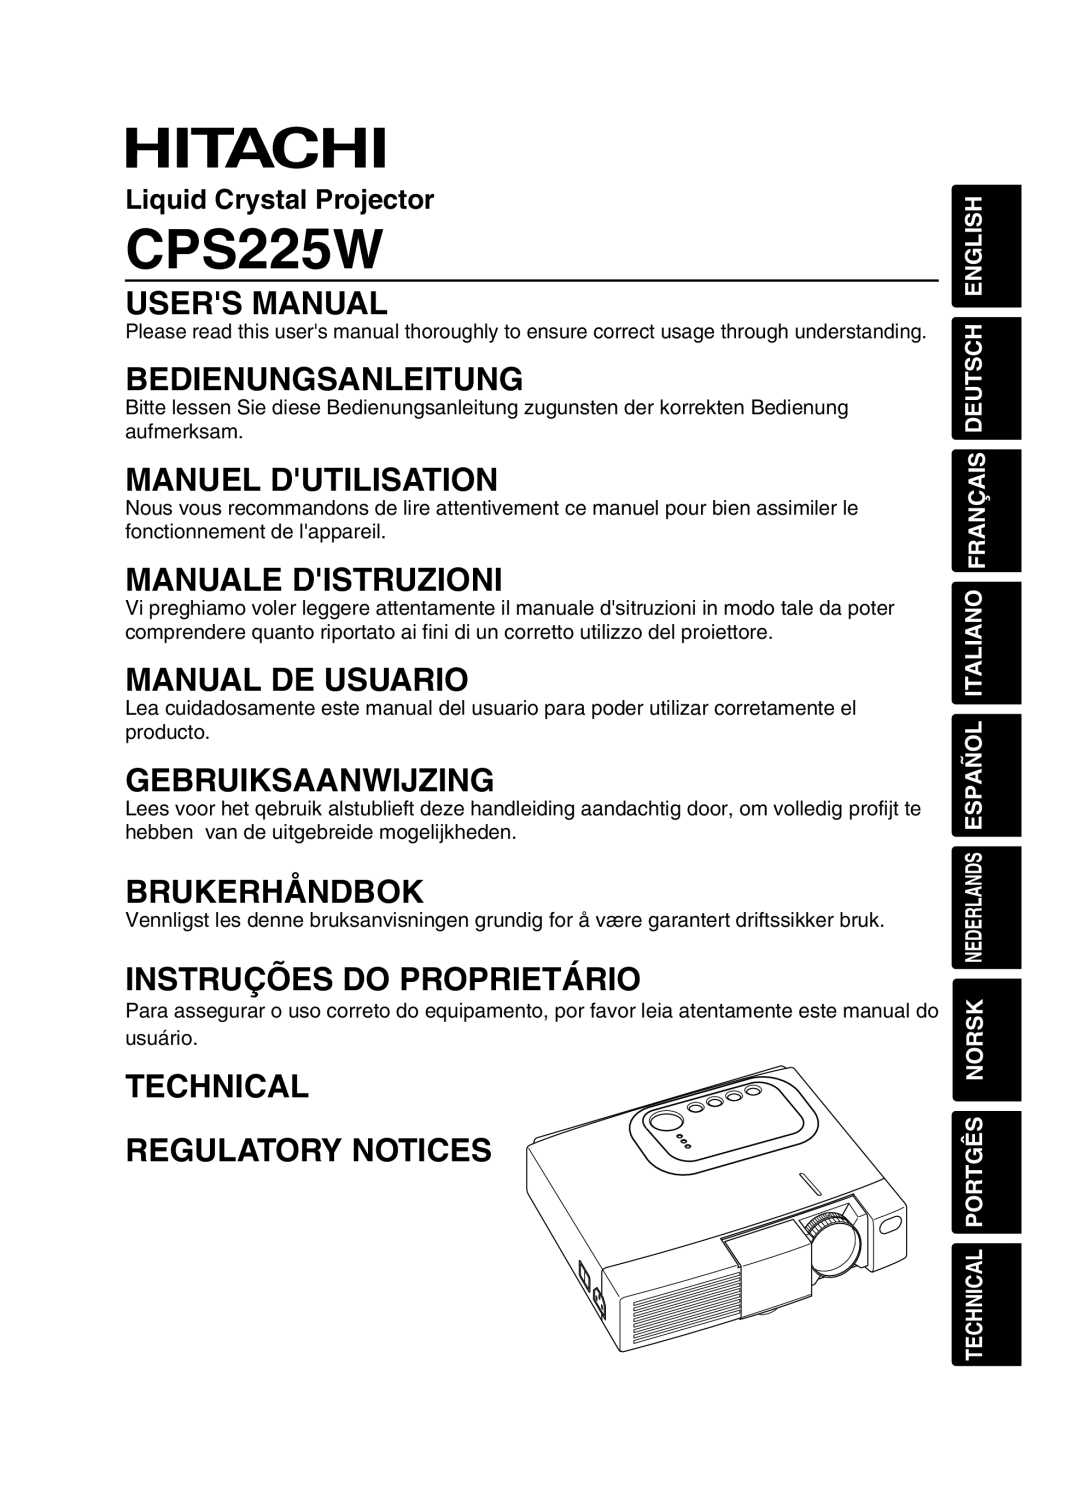 Hitachi CPS225W user manual Bedienungsanleitung, Manuel Dutilisation, Manuale Distruzioni, Manual De Usuario 